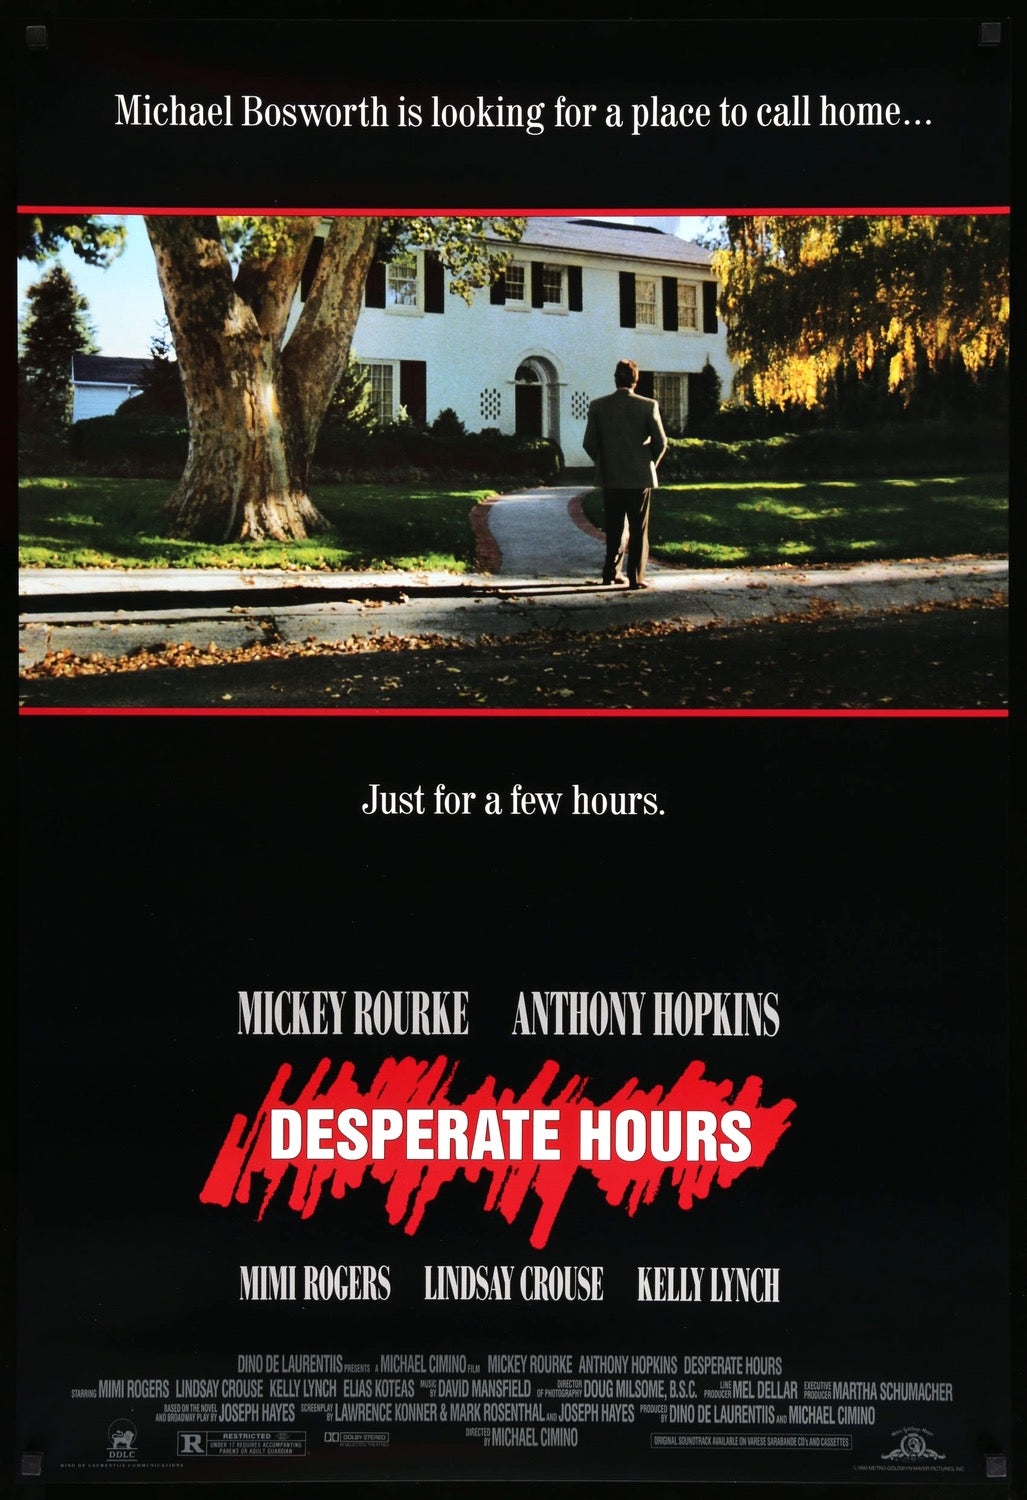 Desperate Hours (1990) original movie poster for sale at Original Film Art